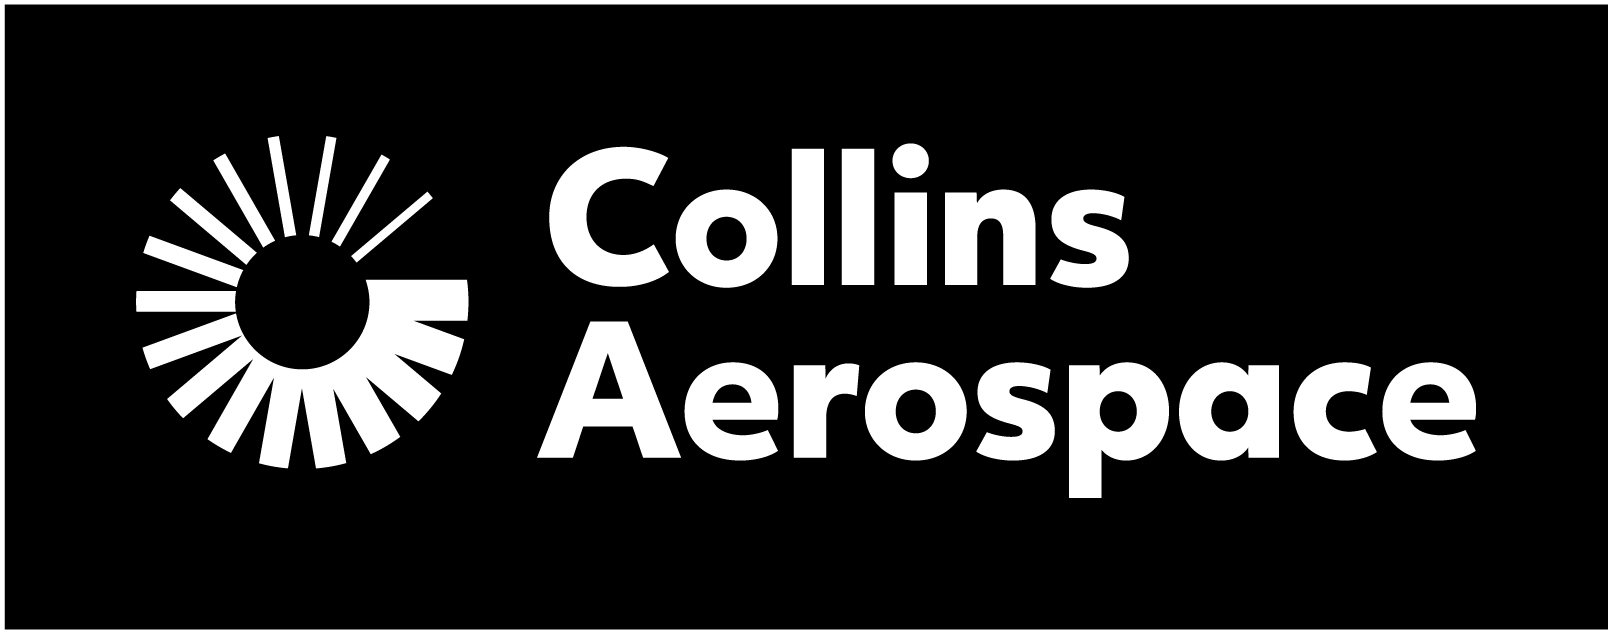 collins_aerospace_logo_stack_white_on_black_rgb.jpg